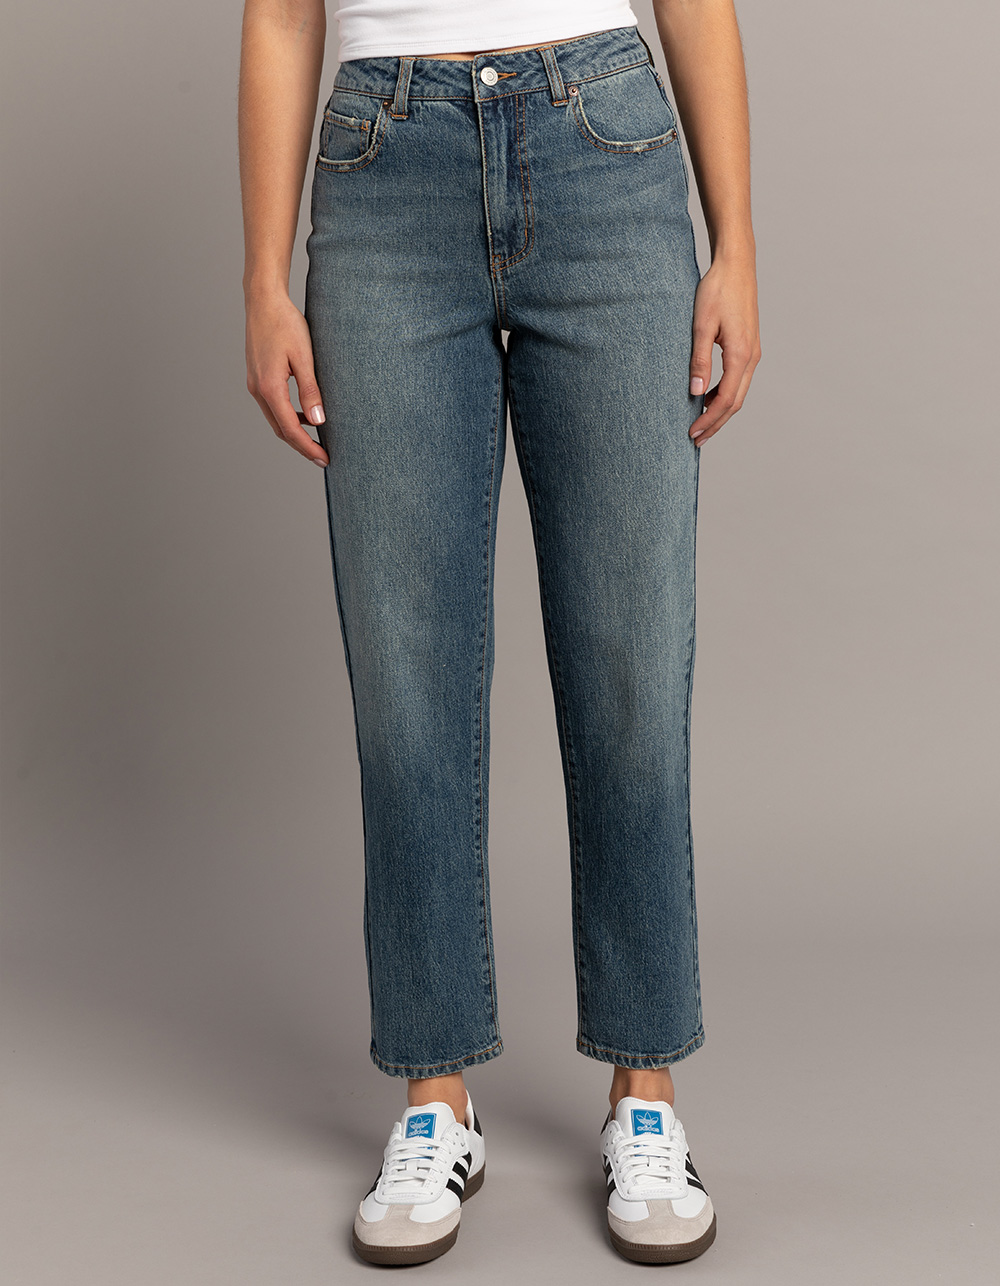 NEW RSQ Jeans Tan Brown Manhattan High Rise Size 7/28 - beyond